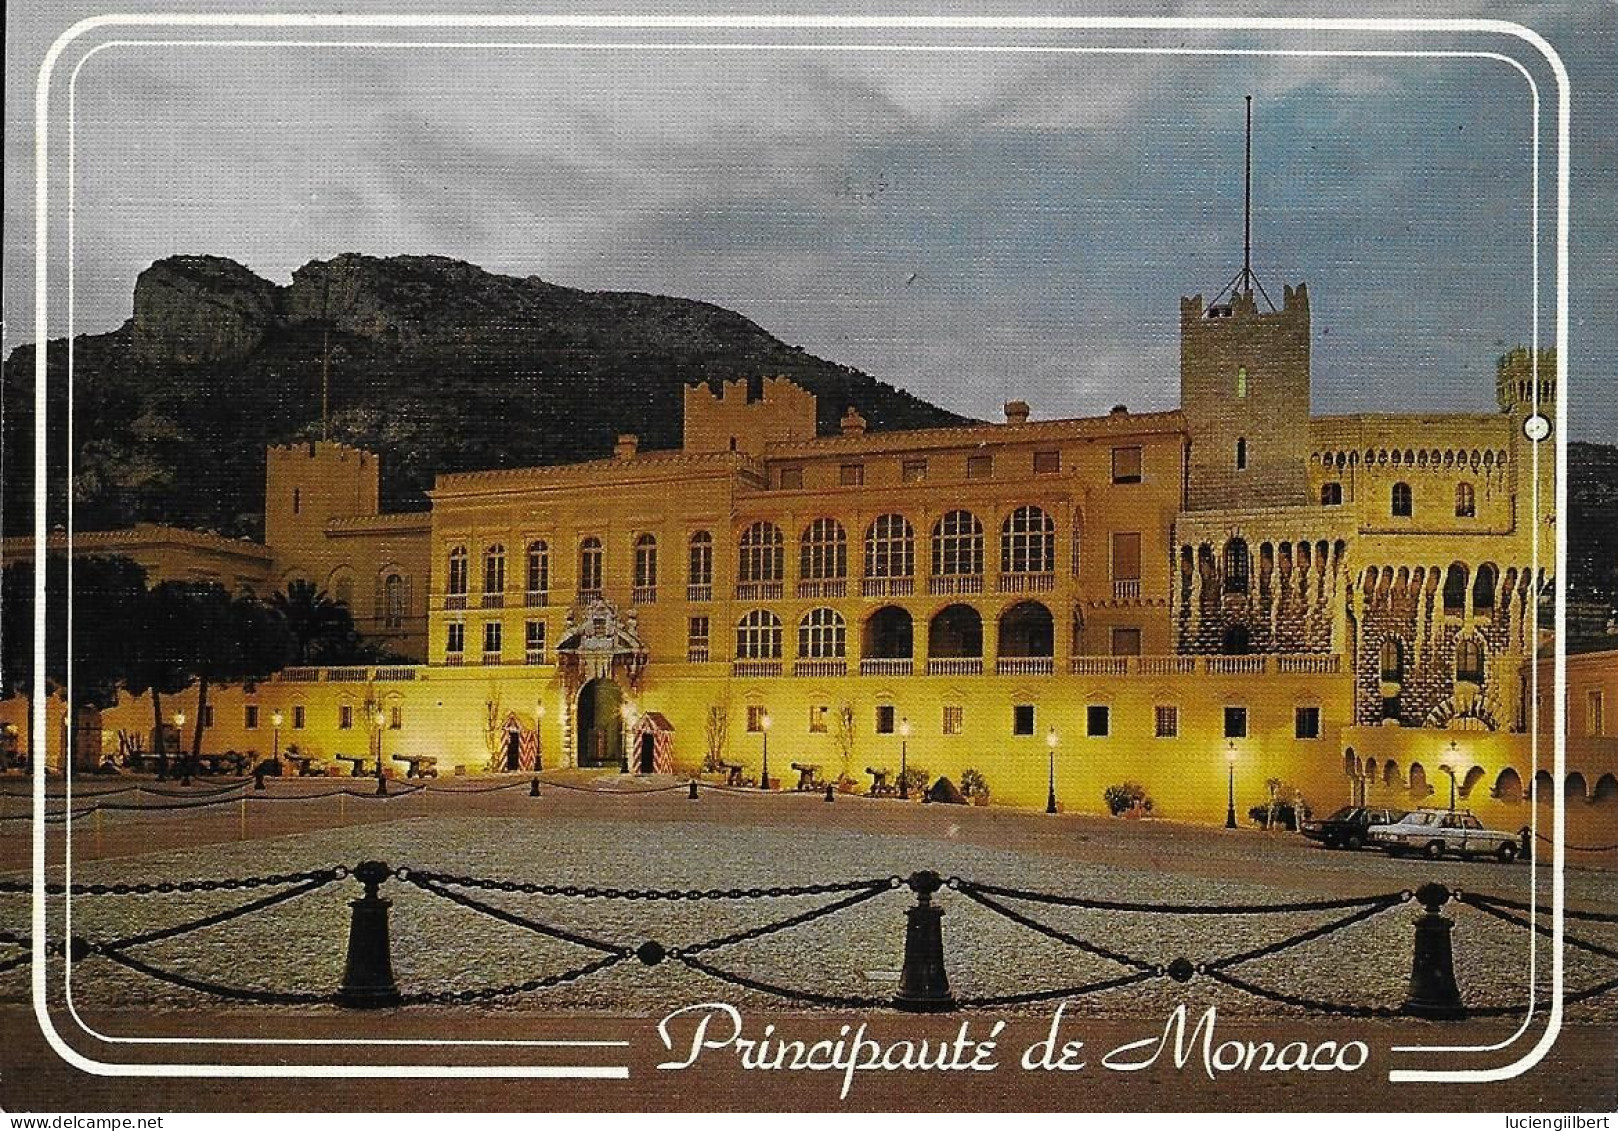 MONACO -- TIMBRE N° 1335  -  PRINCE RAINIER III -  FLAMME RALLYE DE MONTE CARLO -    1985 - Postmarks